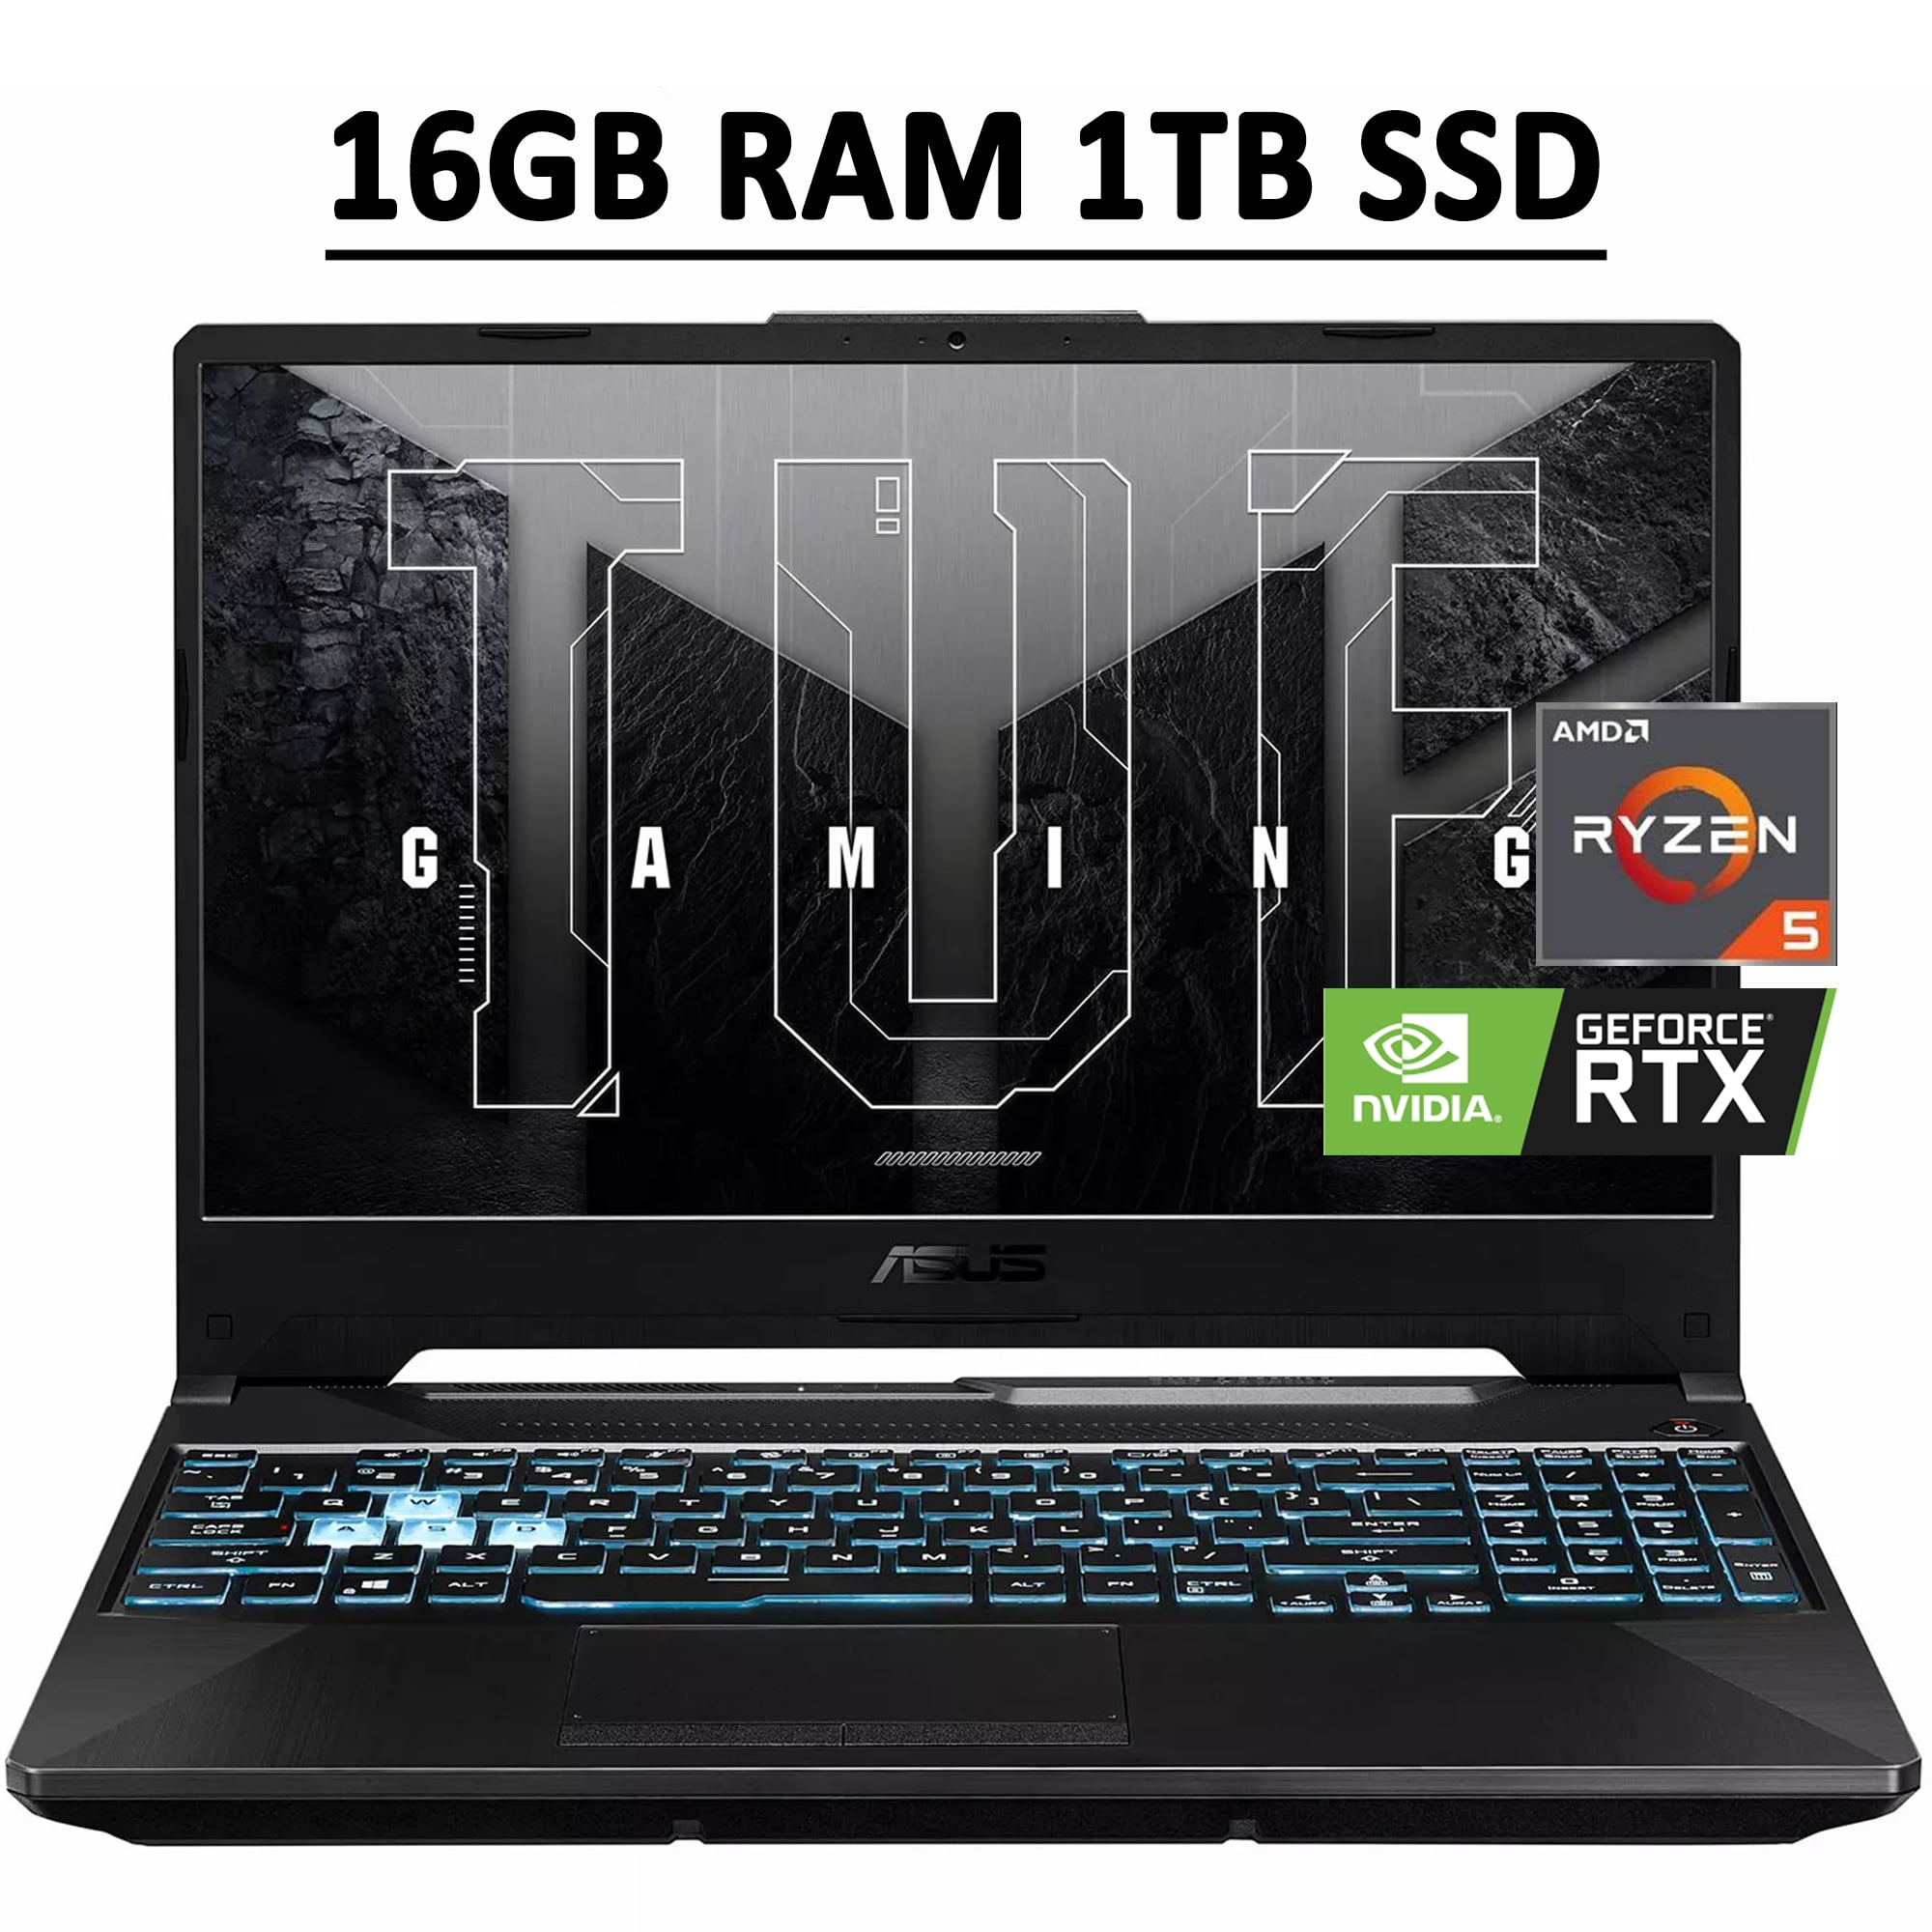 optocht zwaarlijvigheid optillen ASUS TUF A15 Gaming Laptop Computer 15.6" FHD 144Hz IPS Display AMD 6-Core  Ryzen 5 5600H 32GB RAM 1TB SSD NVIDIA GeForce RTX 3050Ti 4GB RGB Backlit  Keyboard USB-C HDMI WiFi6 Win10